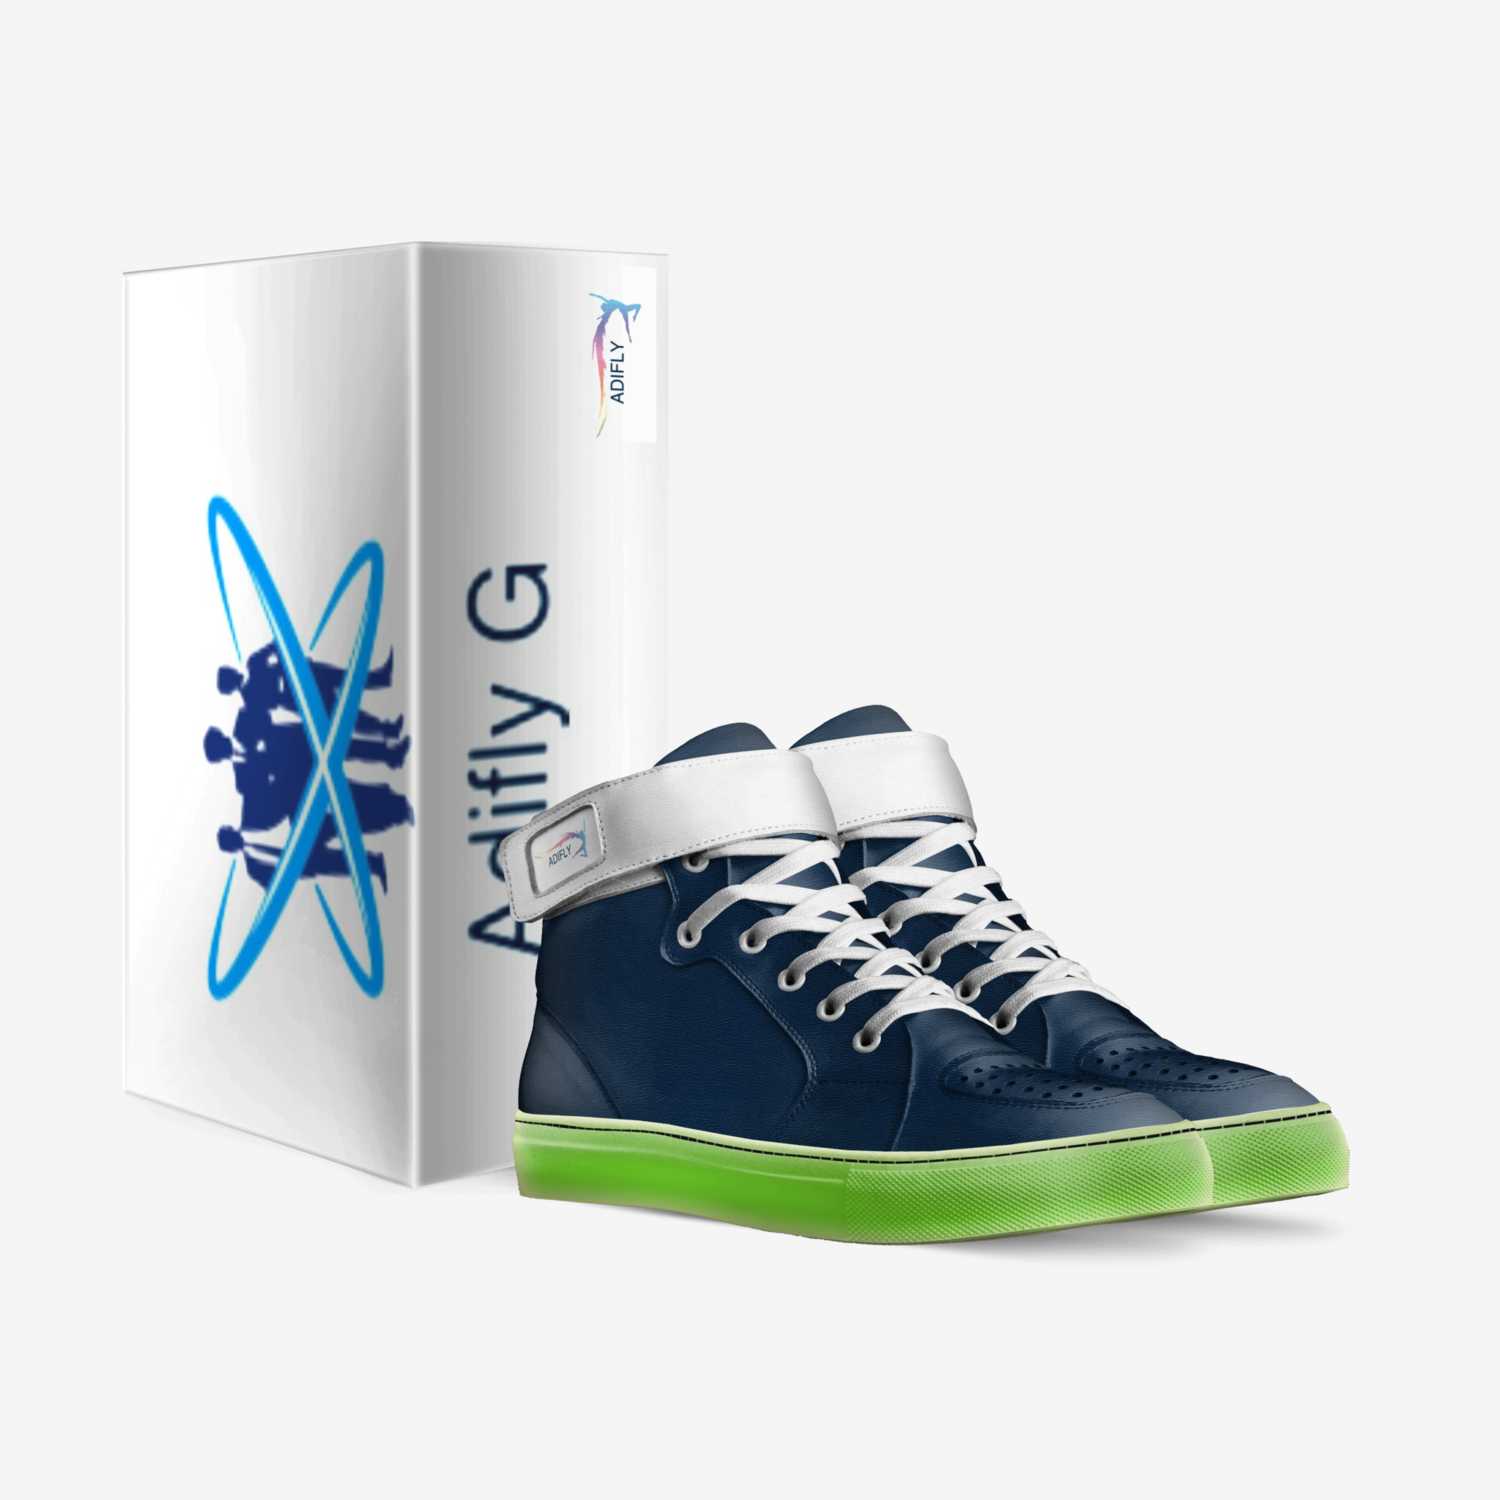 Adifly custom made in Italy shoes by Giovani Adiyo | Box view